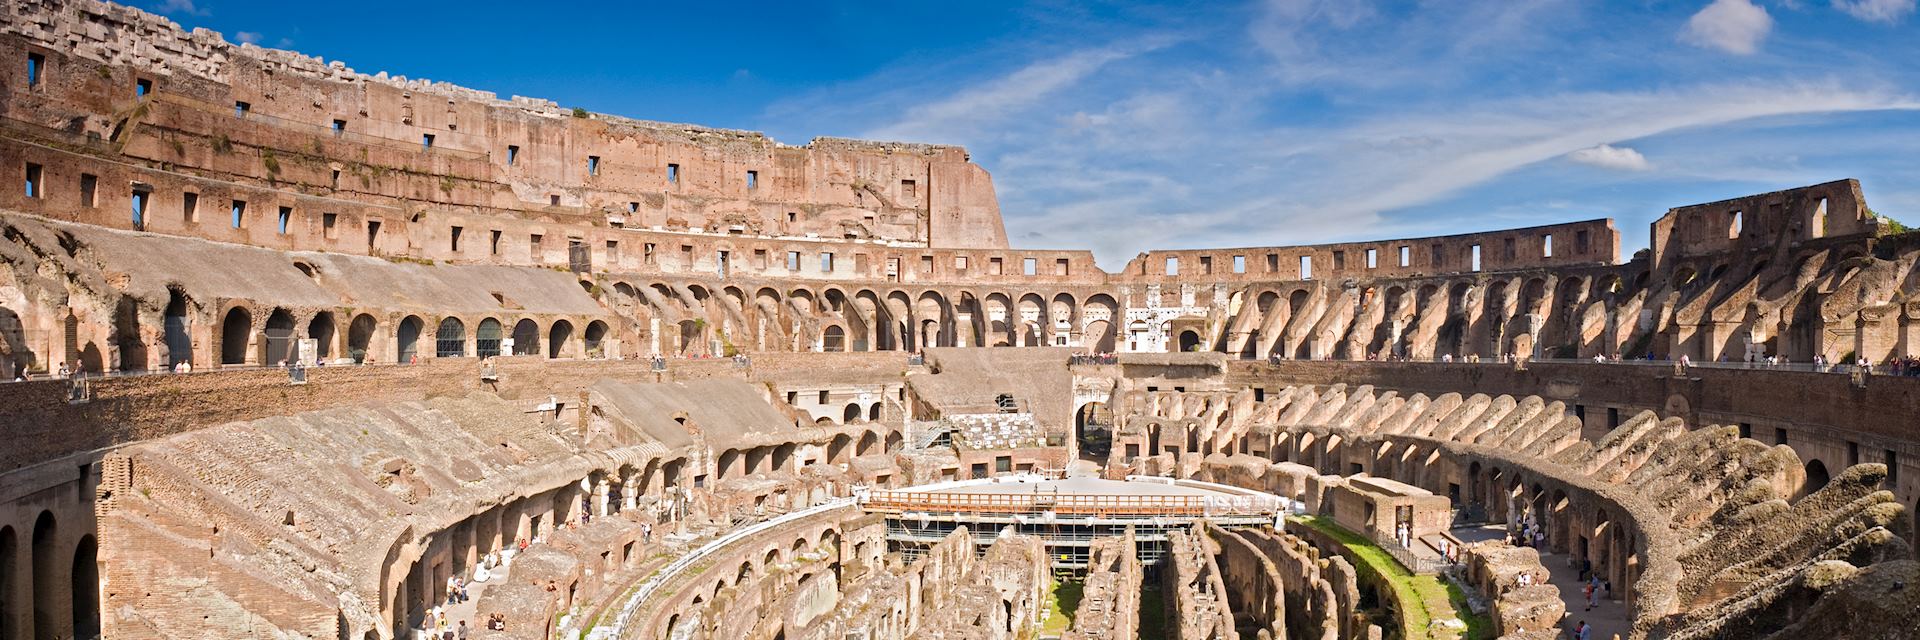 Amphitheatre of the Colosseum, Rome, Italy